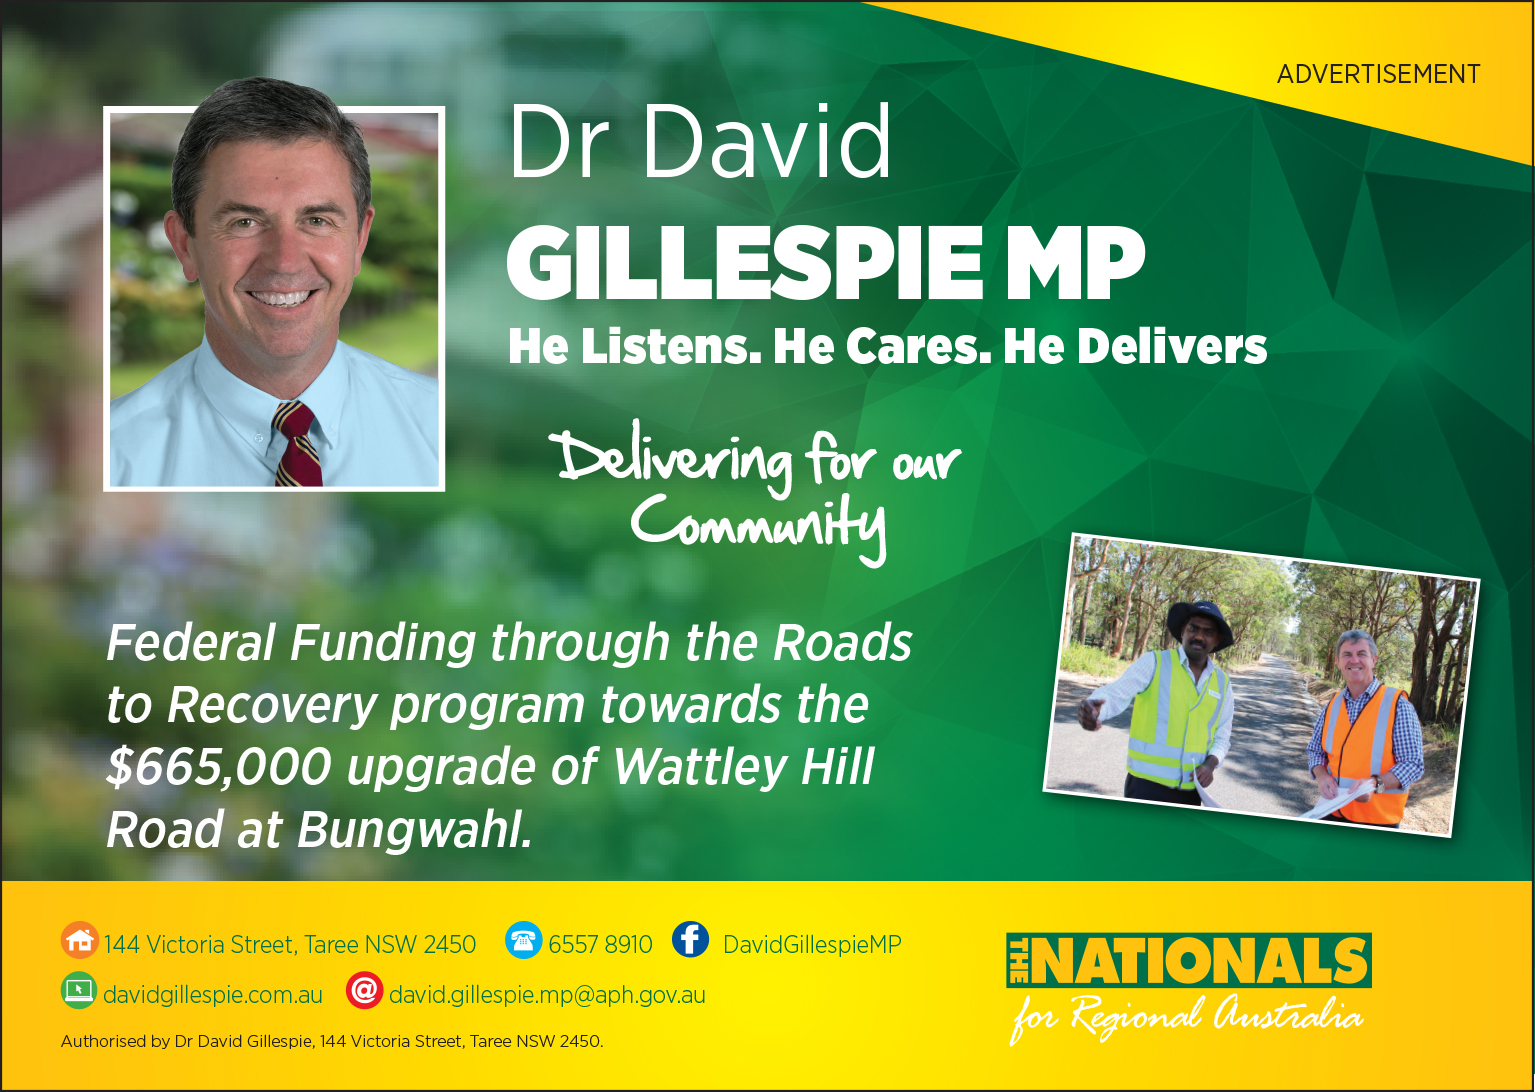 Dr David Gillespie MP -Member for Lyne